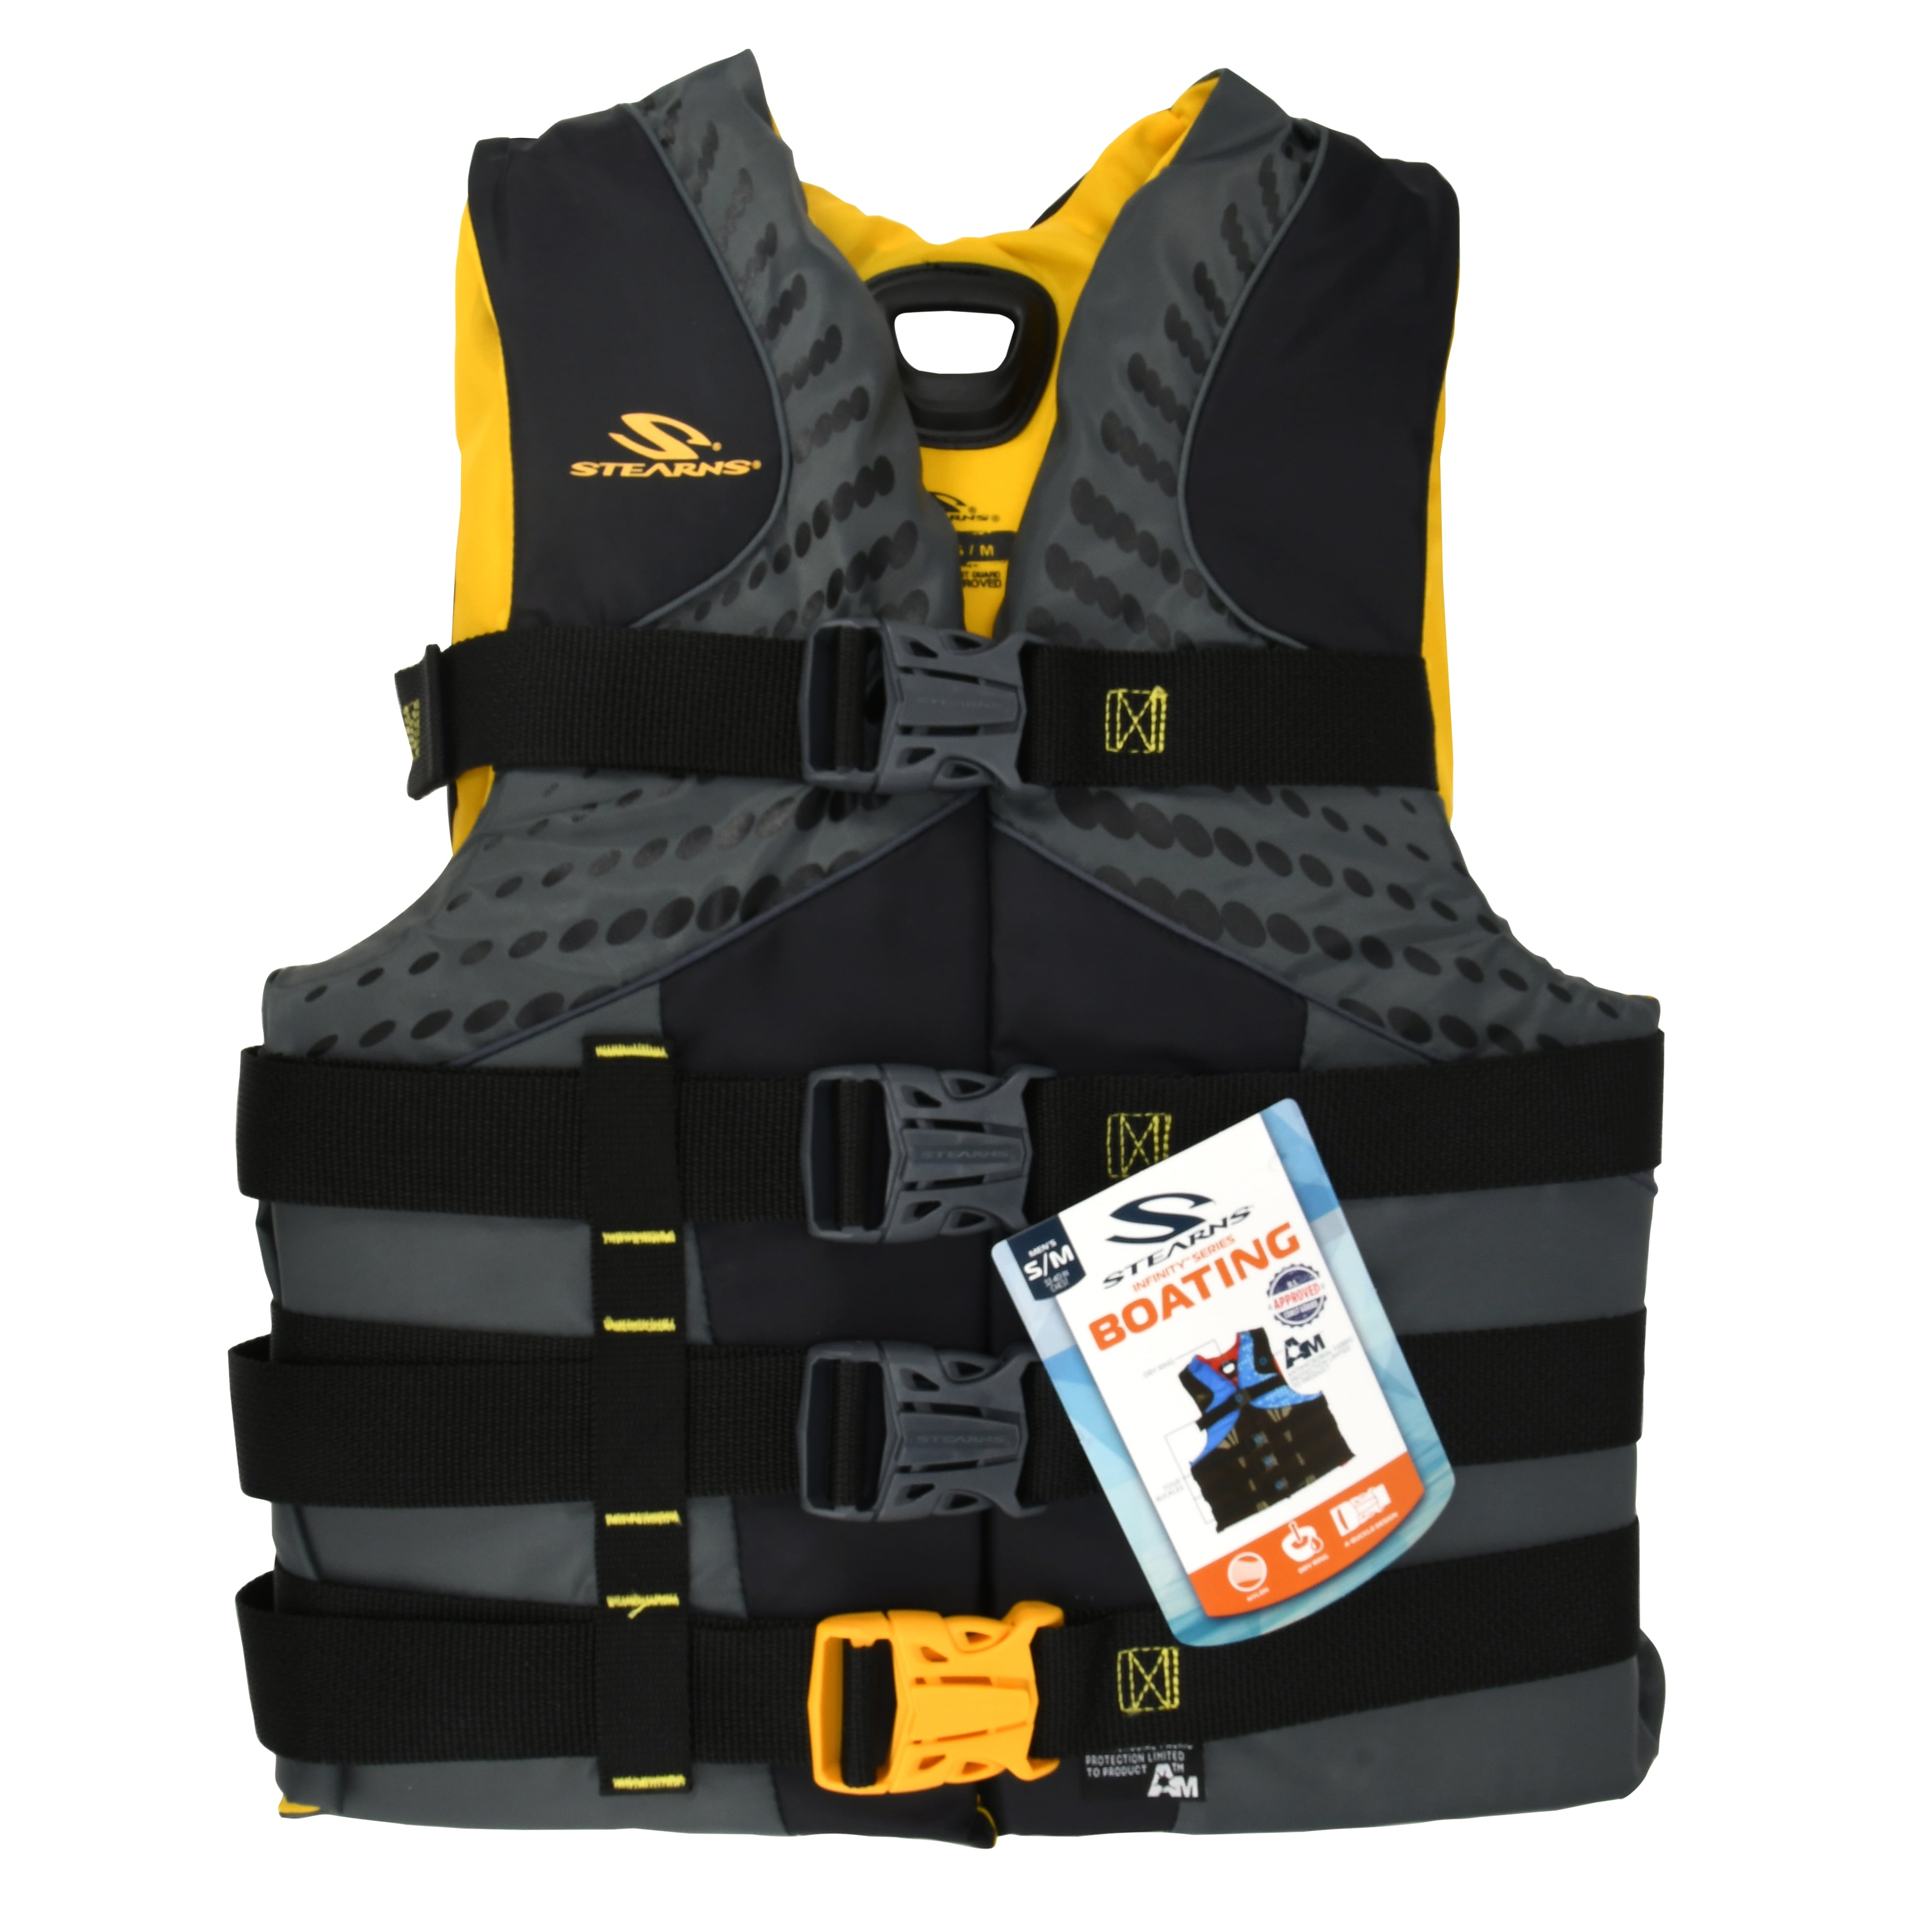 1 pack Stearns MEDIUM Black Orange Hydroprene Life Jacket Wakeboard Vest M 